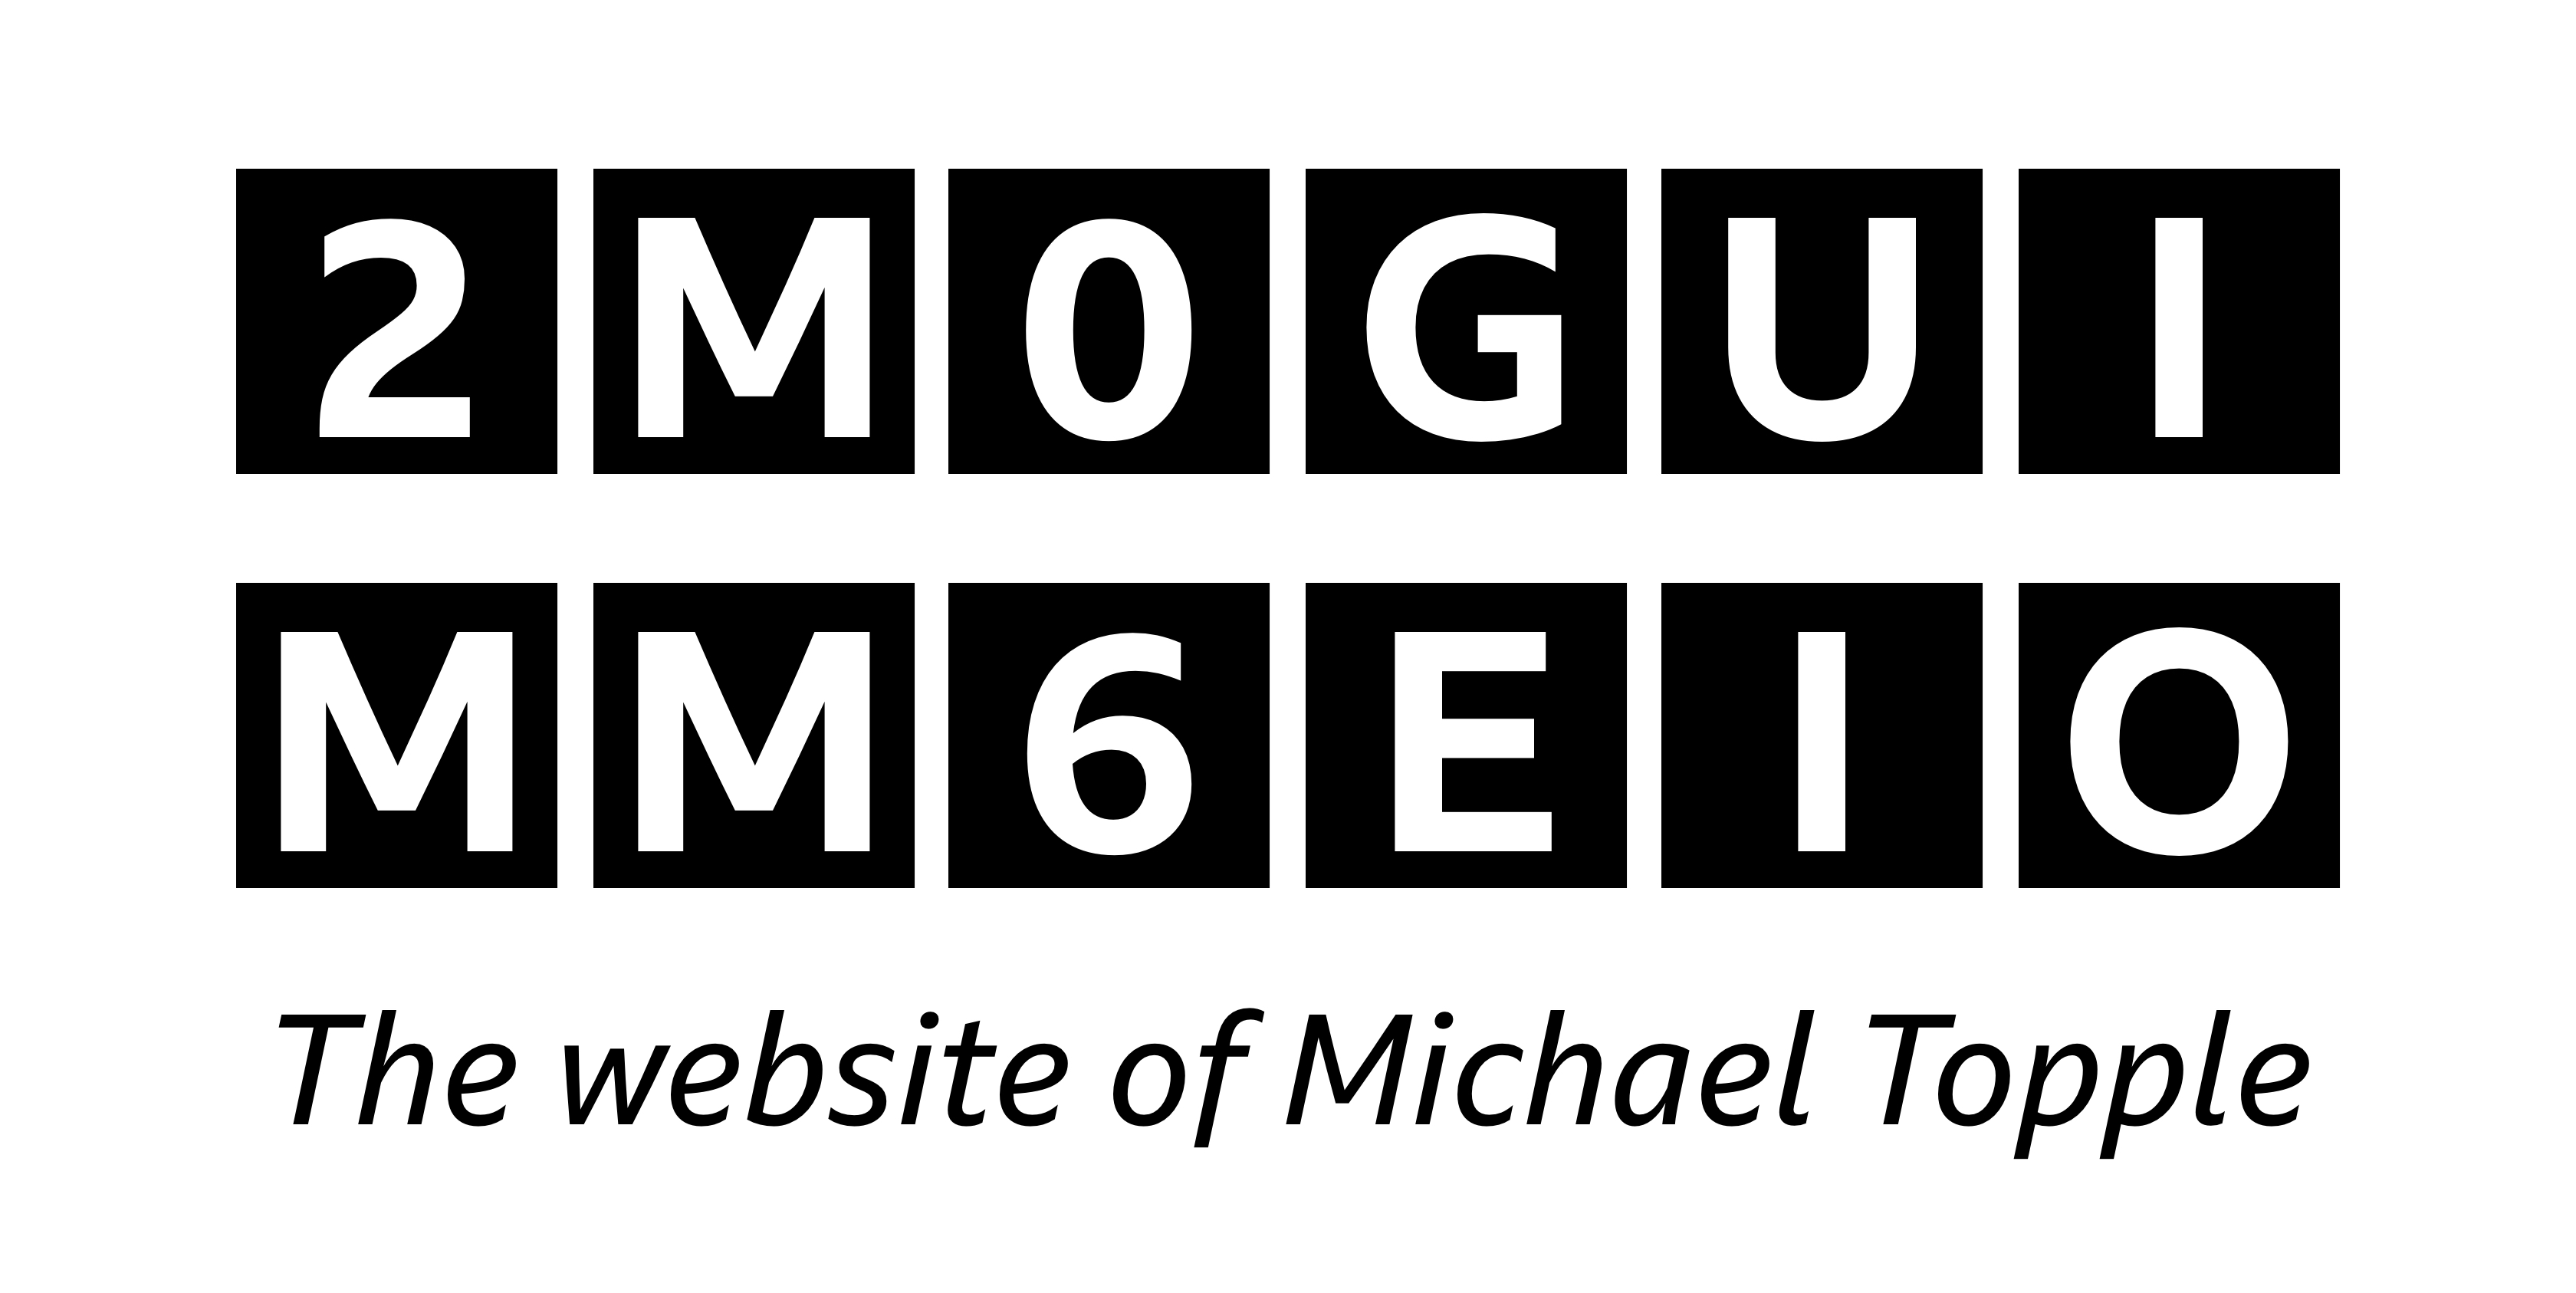 2M0GUI / MM6EIO - The website of Michael Topple